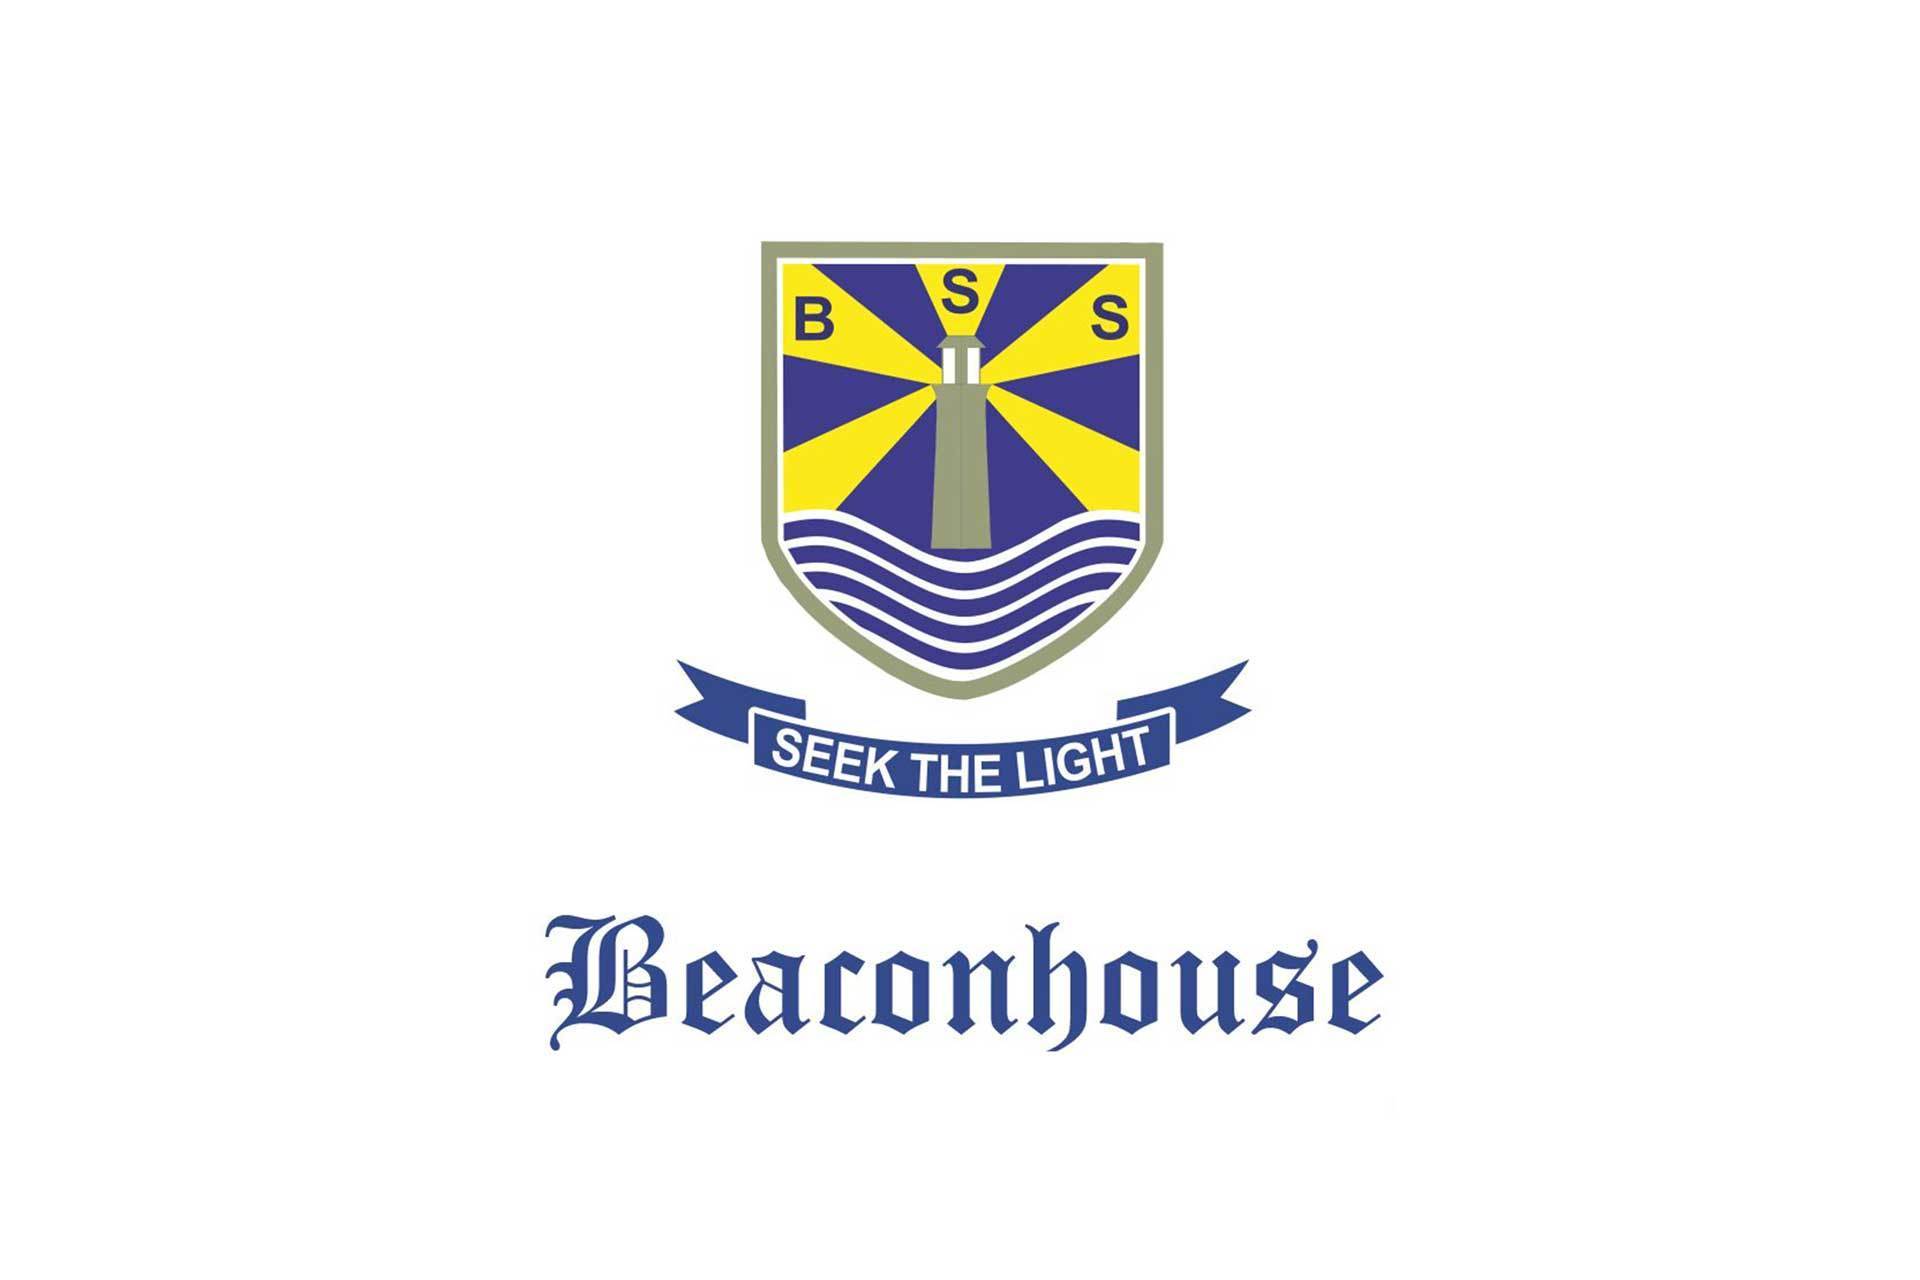 Beaconhouse Logo - Anti Beaconhouse Campaign: School To Move FIA Against 'Engineered